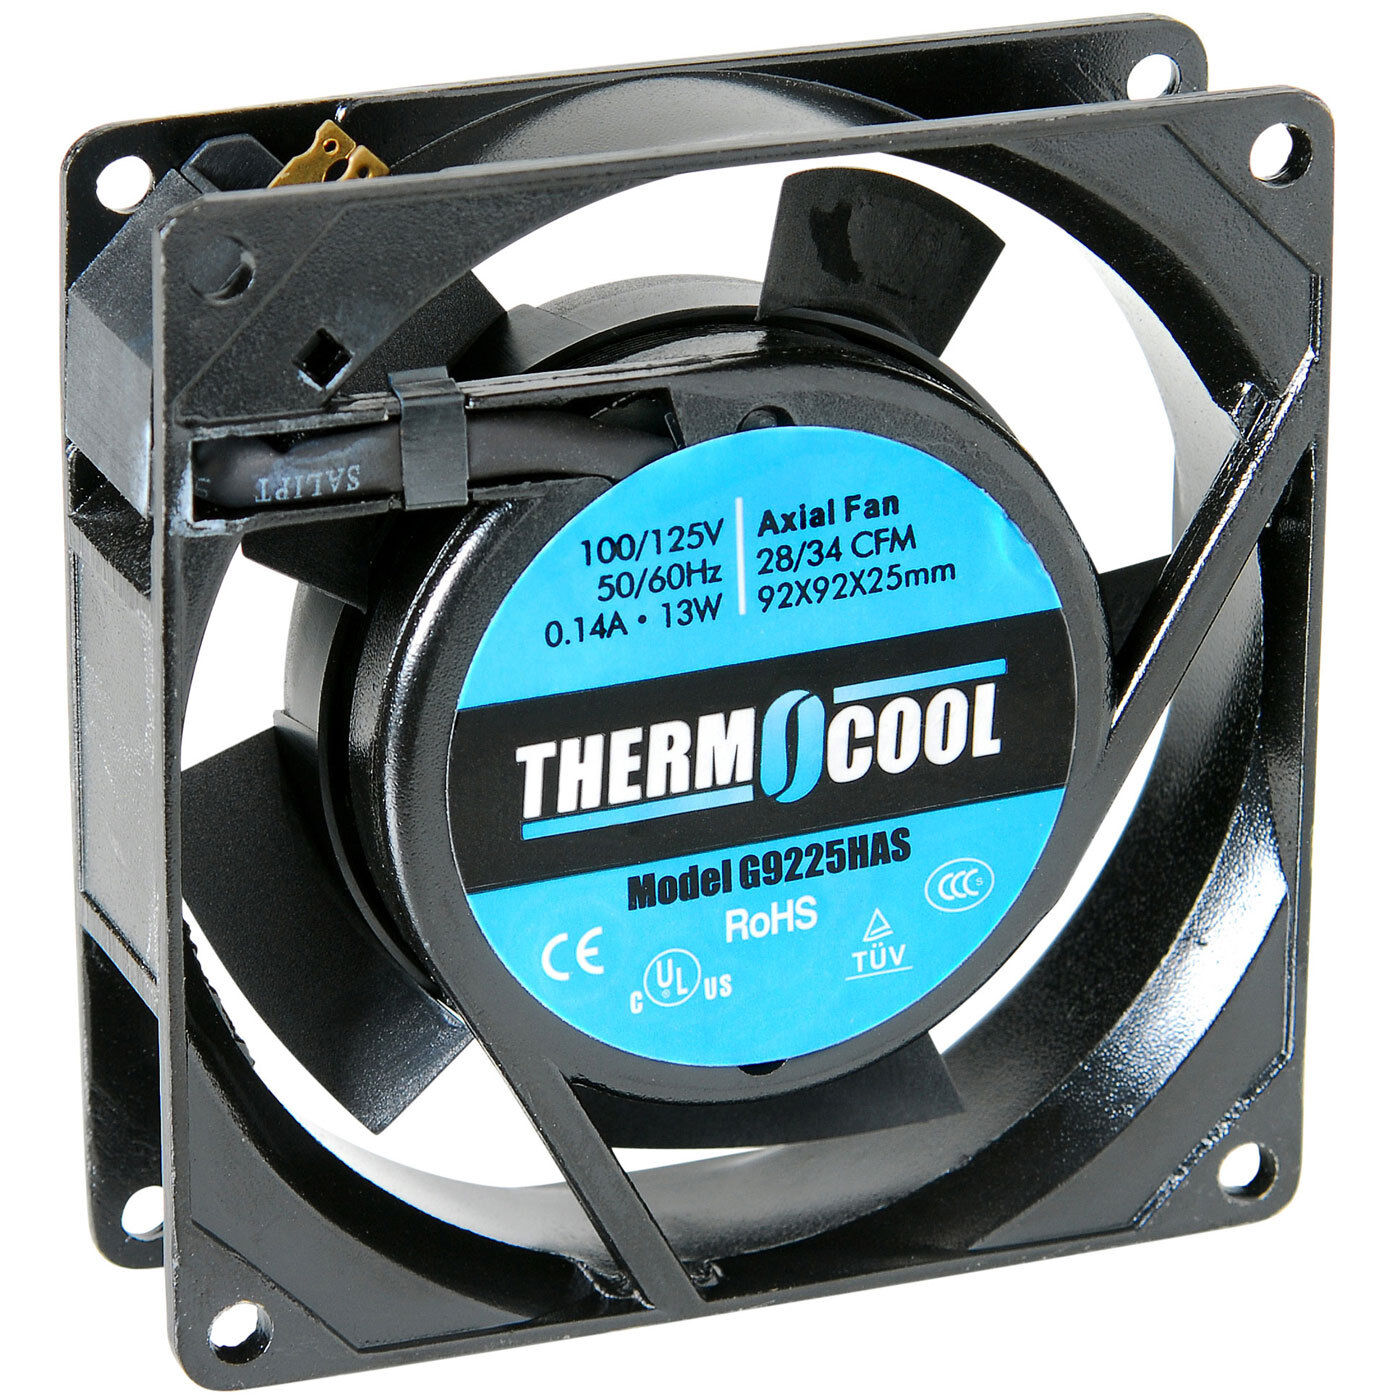 Thermocool 110 VAC Fan 92 x 25mm Sleeve Bearing 28 CFM